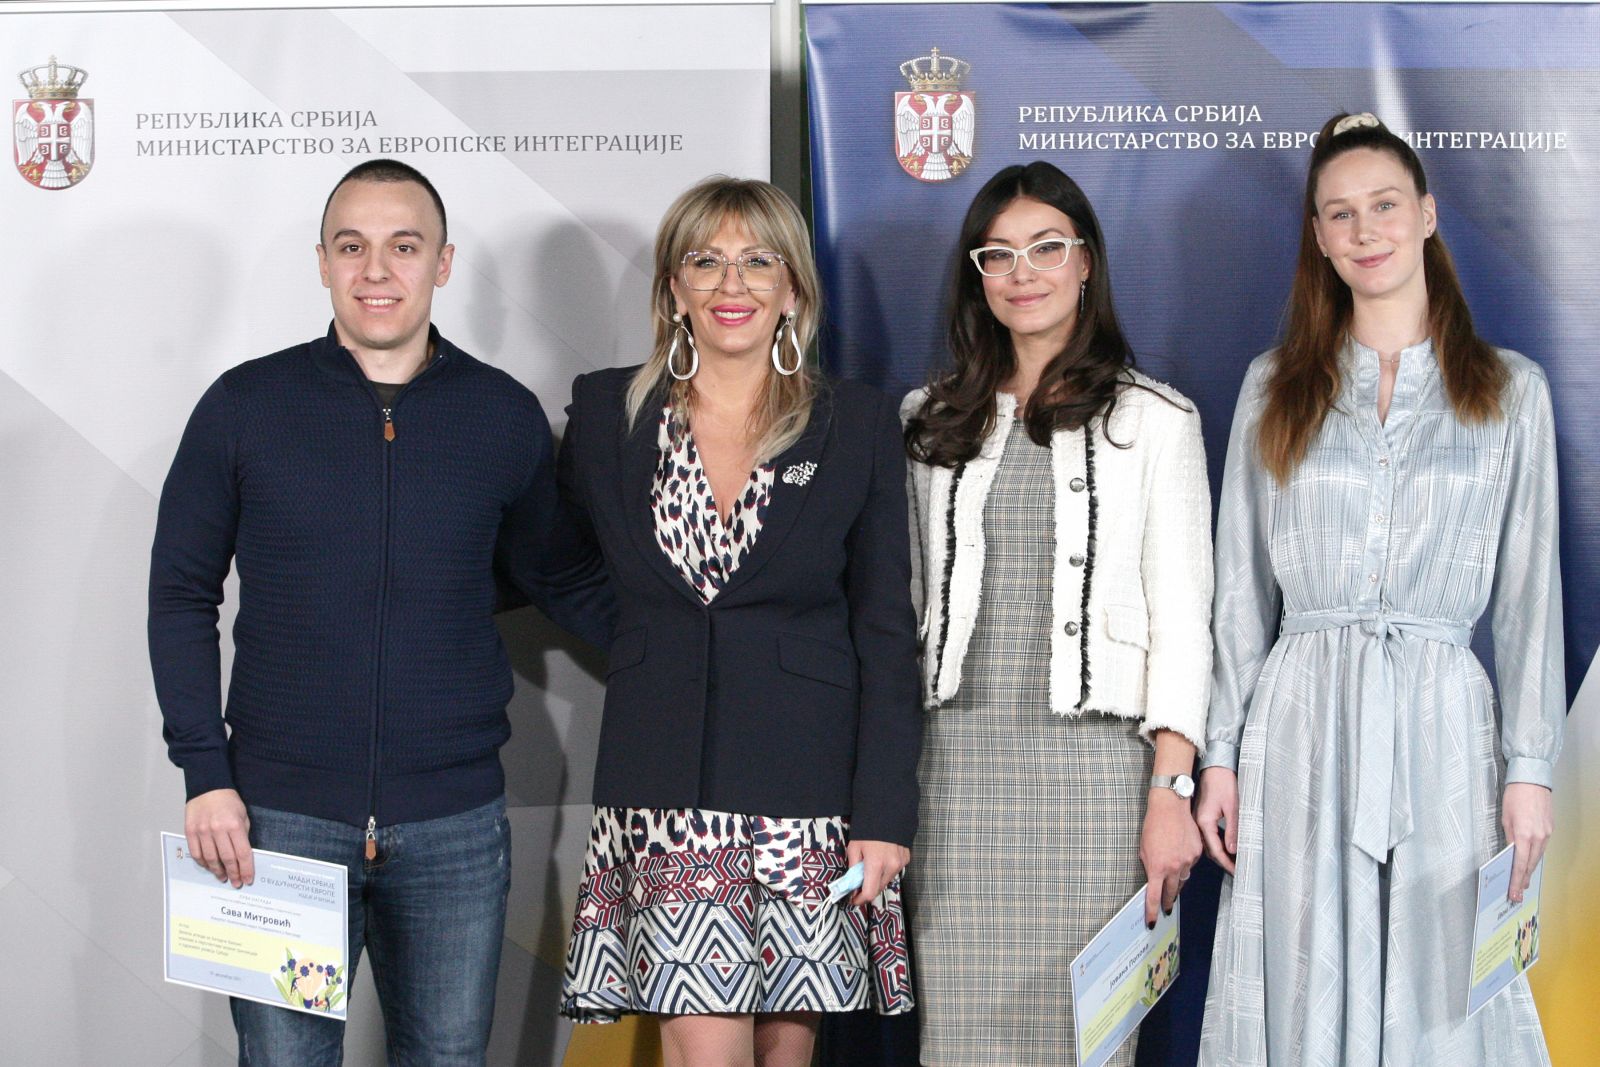 J. Joksimović presented awards for best student papers on EU